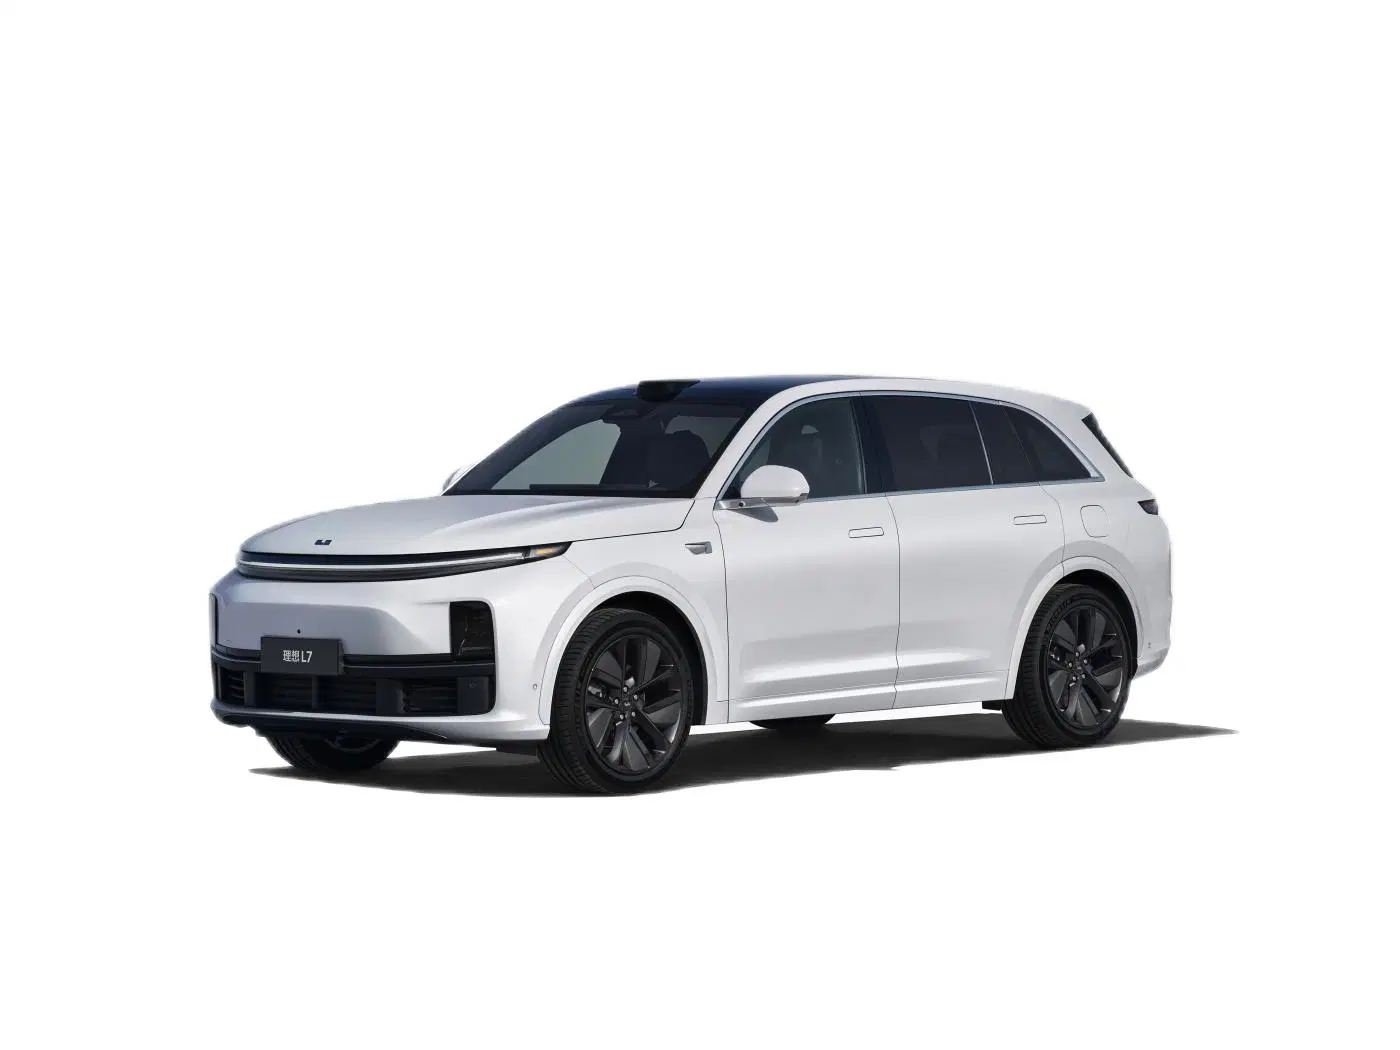 2023 Li L7 SUV Lixiang L7 Max Hybrid Gebrauchtwagen Range-Extended Electric Vehicle High Level New Energy Vehicle